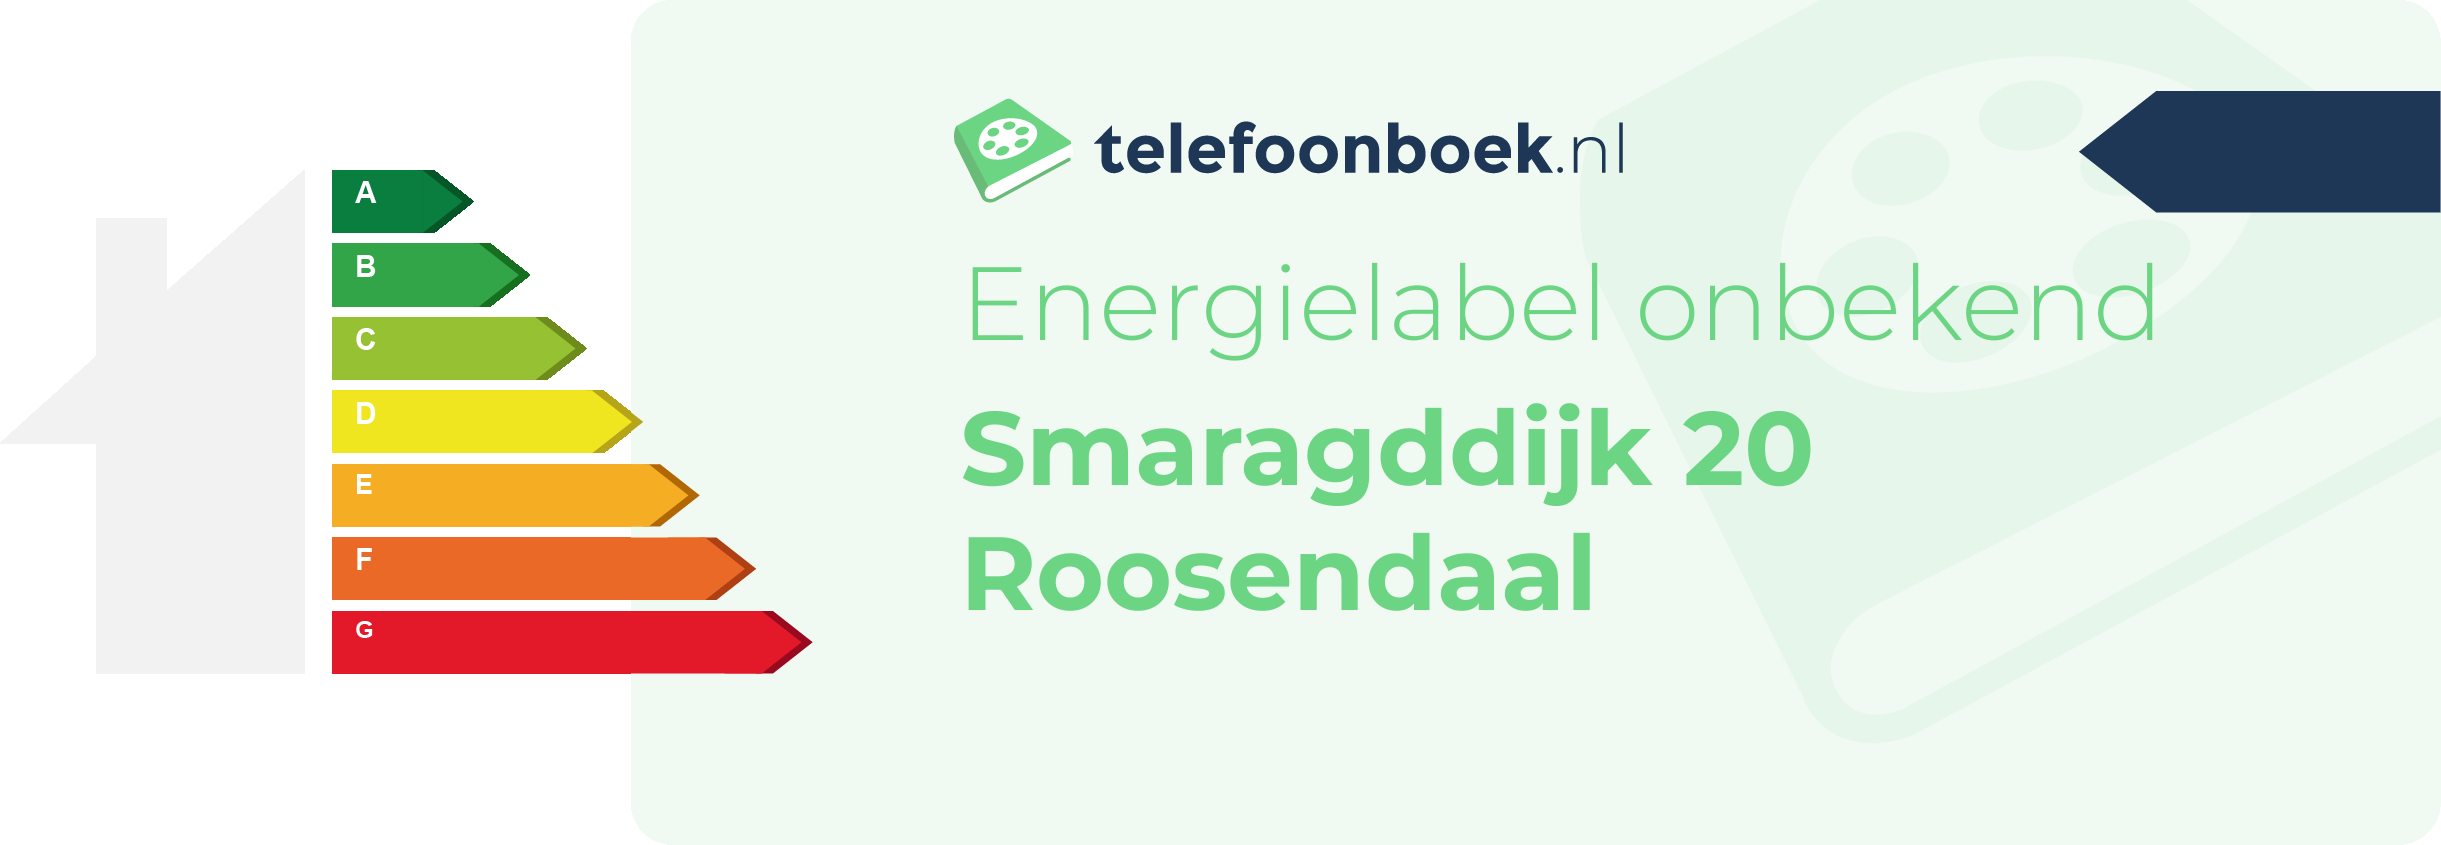 Energielabel Smaragddijk 20 Roosendaal